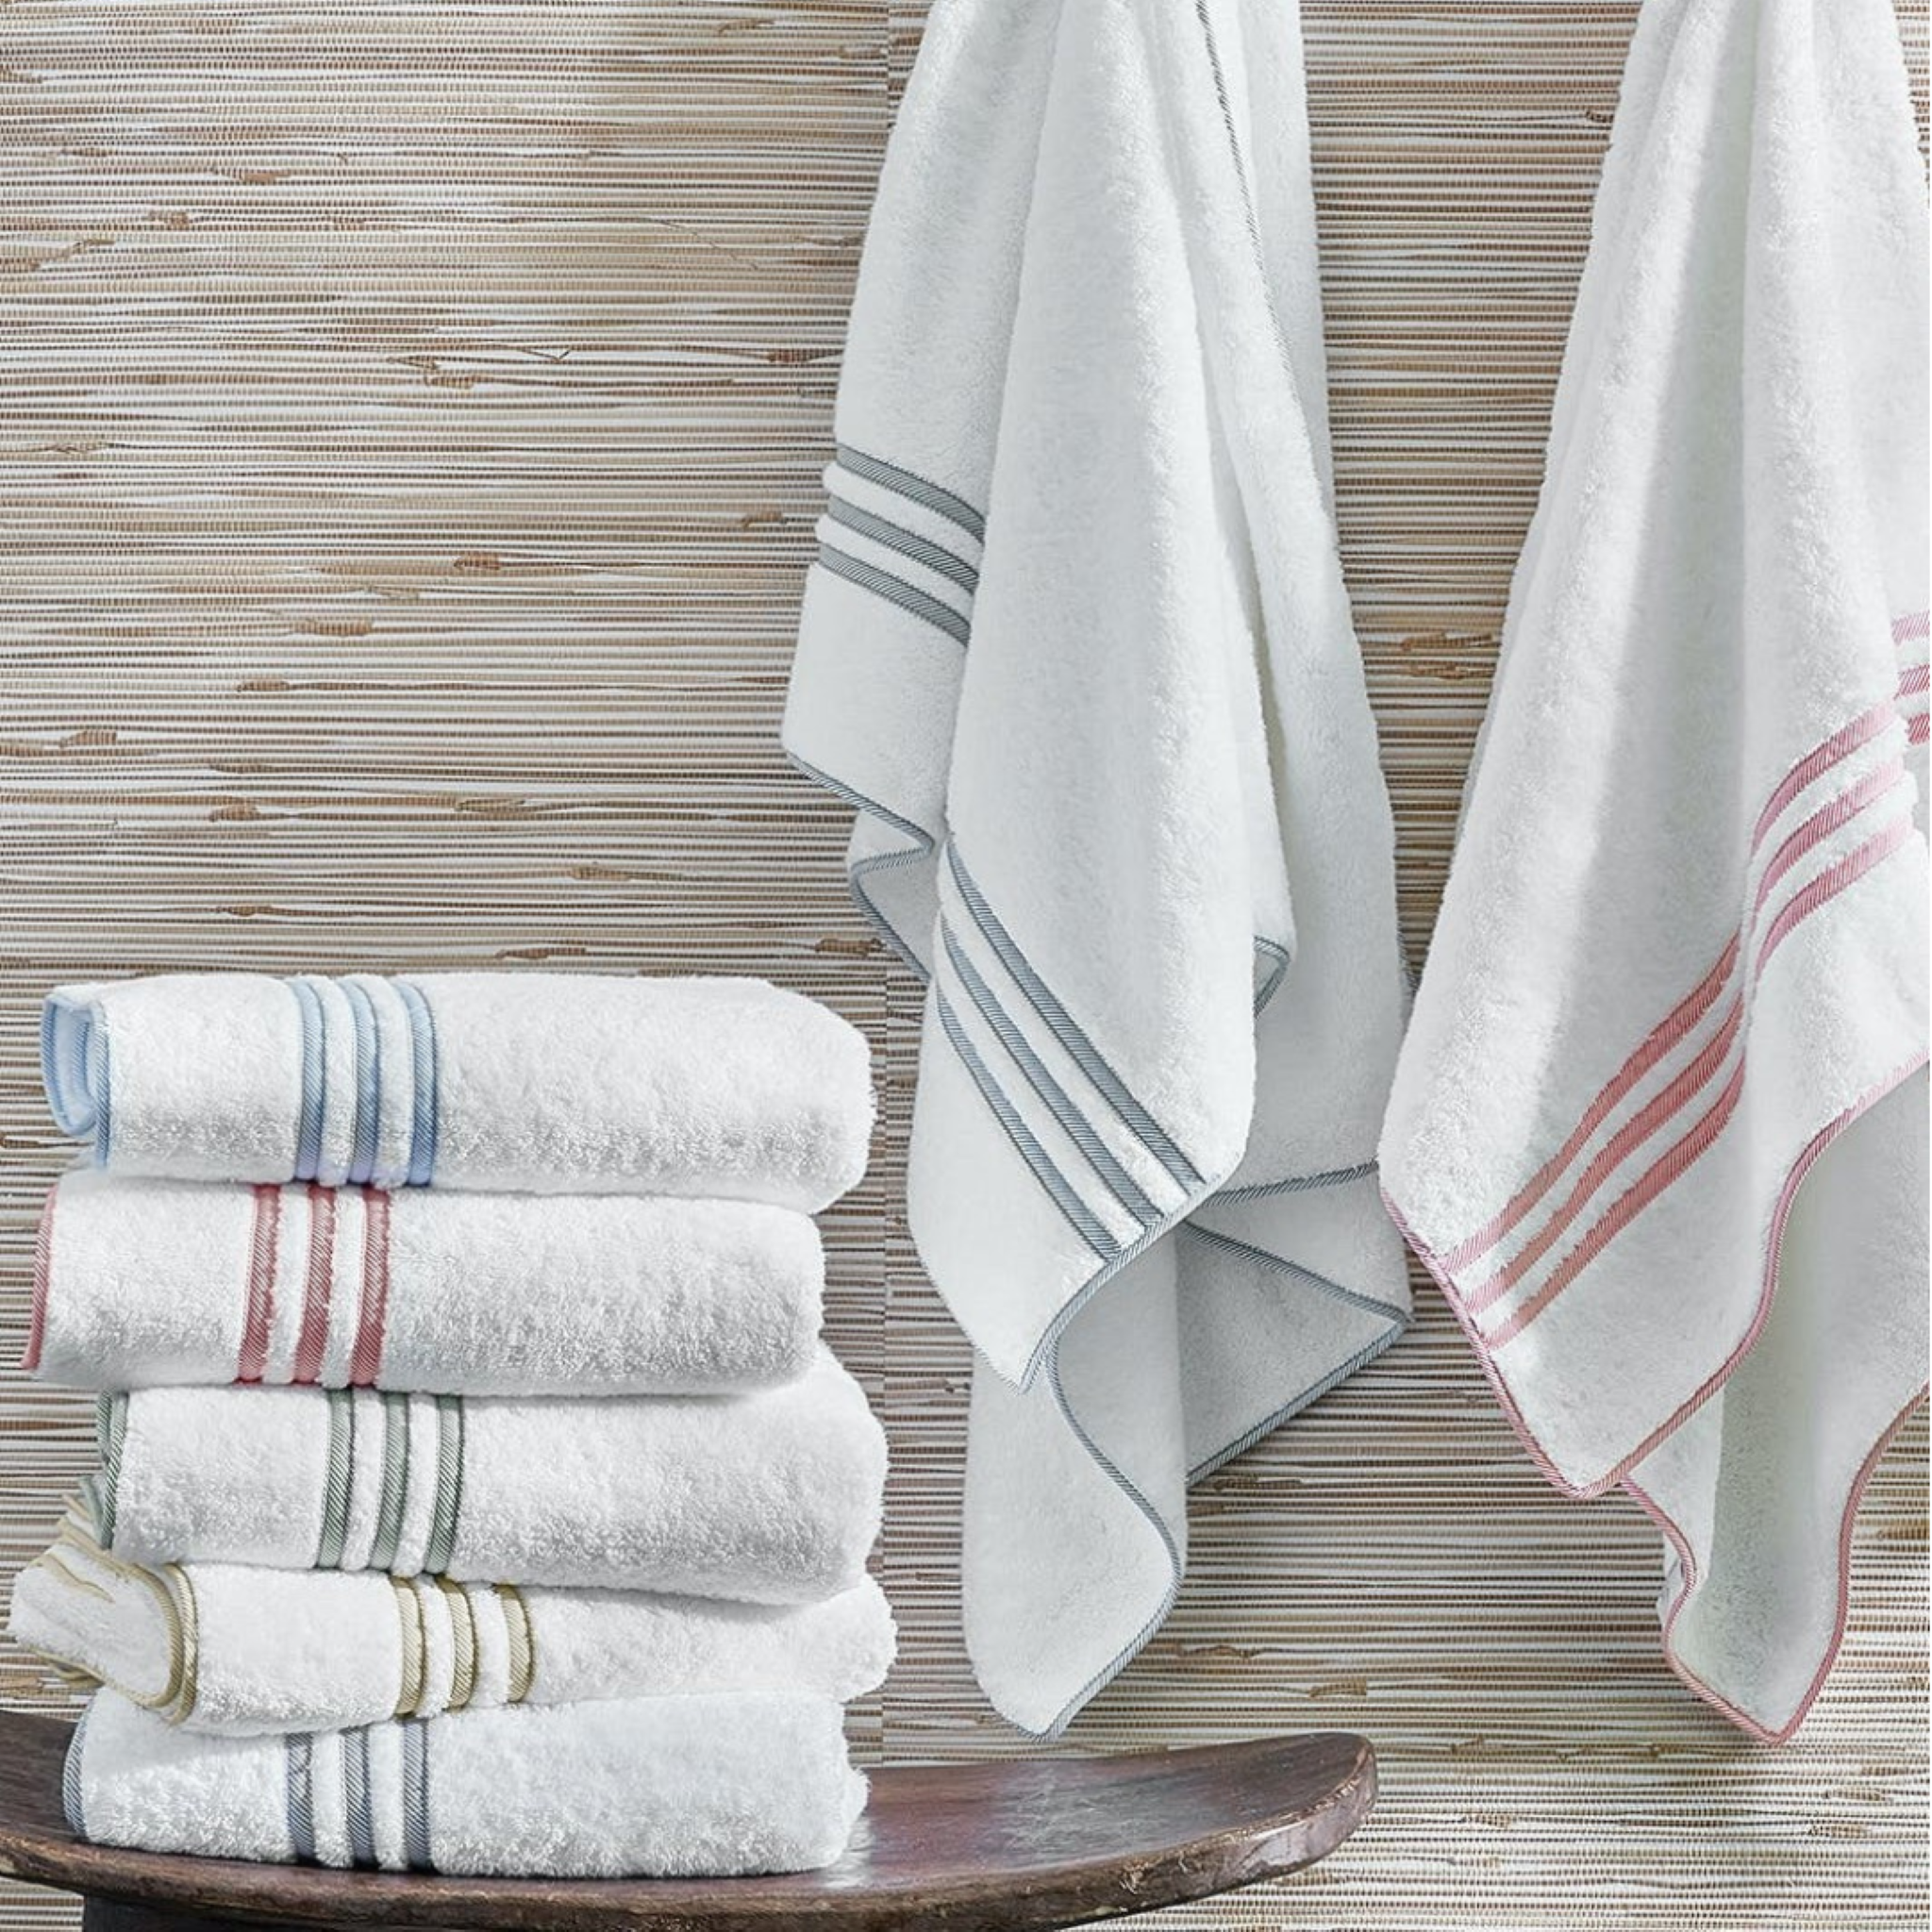 Shop for the Matouk Beach Road Bath Towel